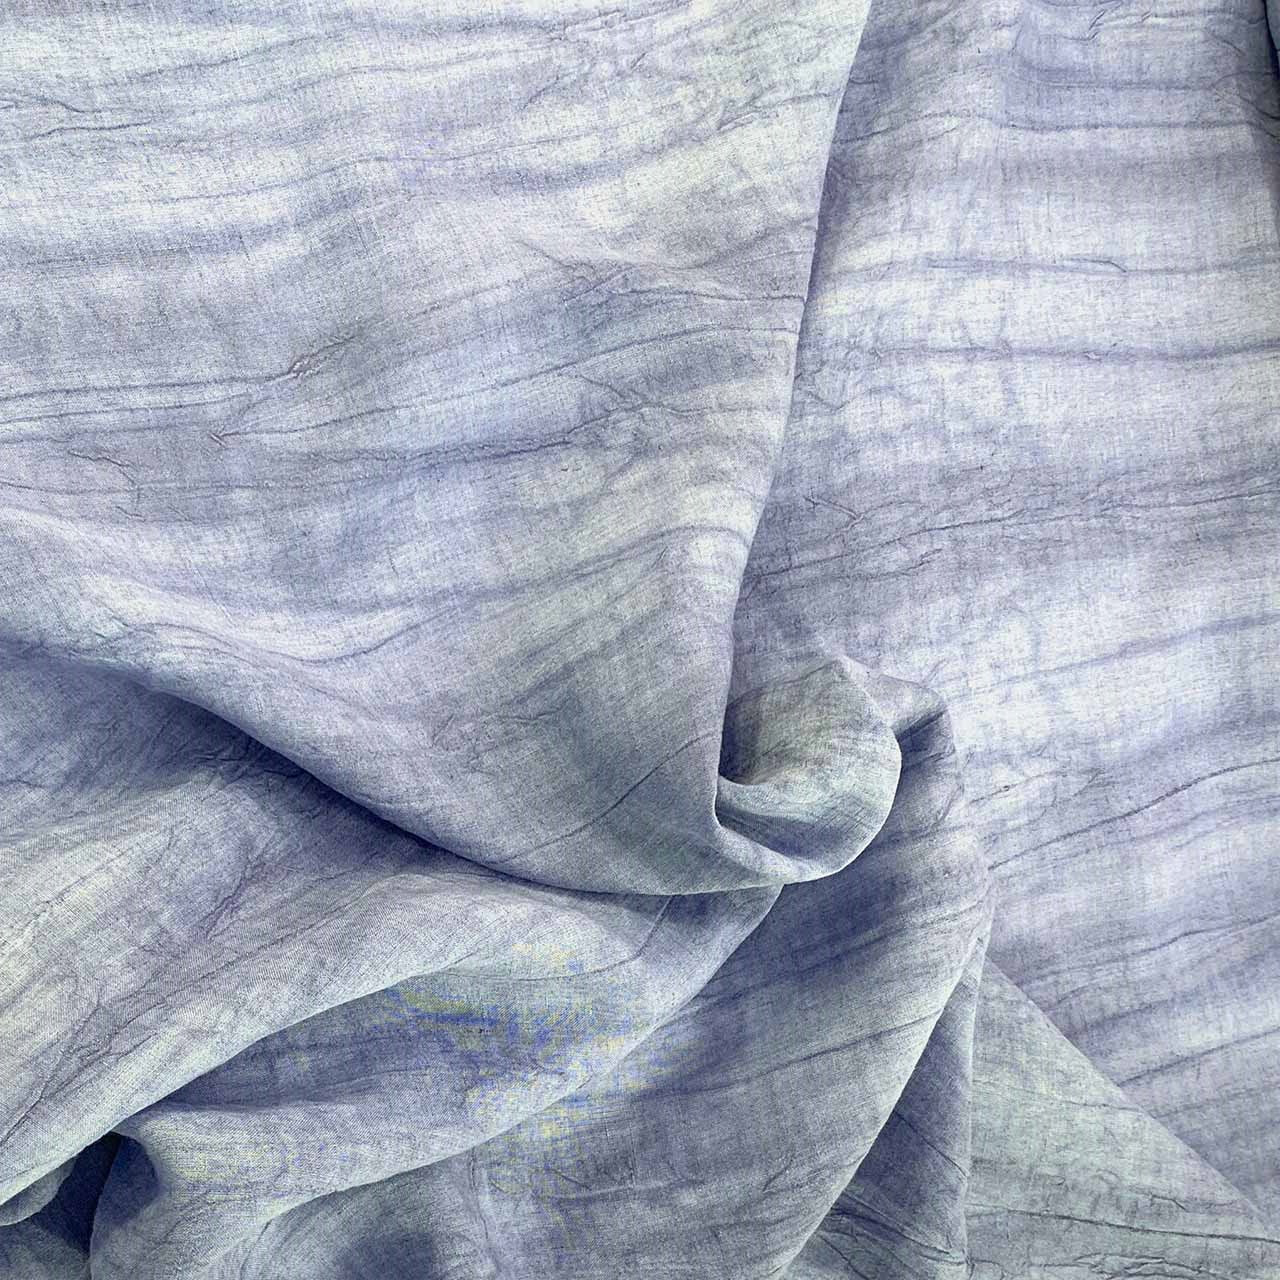 denim stonewashed crinkle linen denim texture linen - Fabric Collection